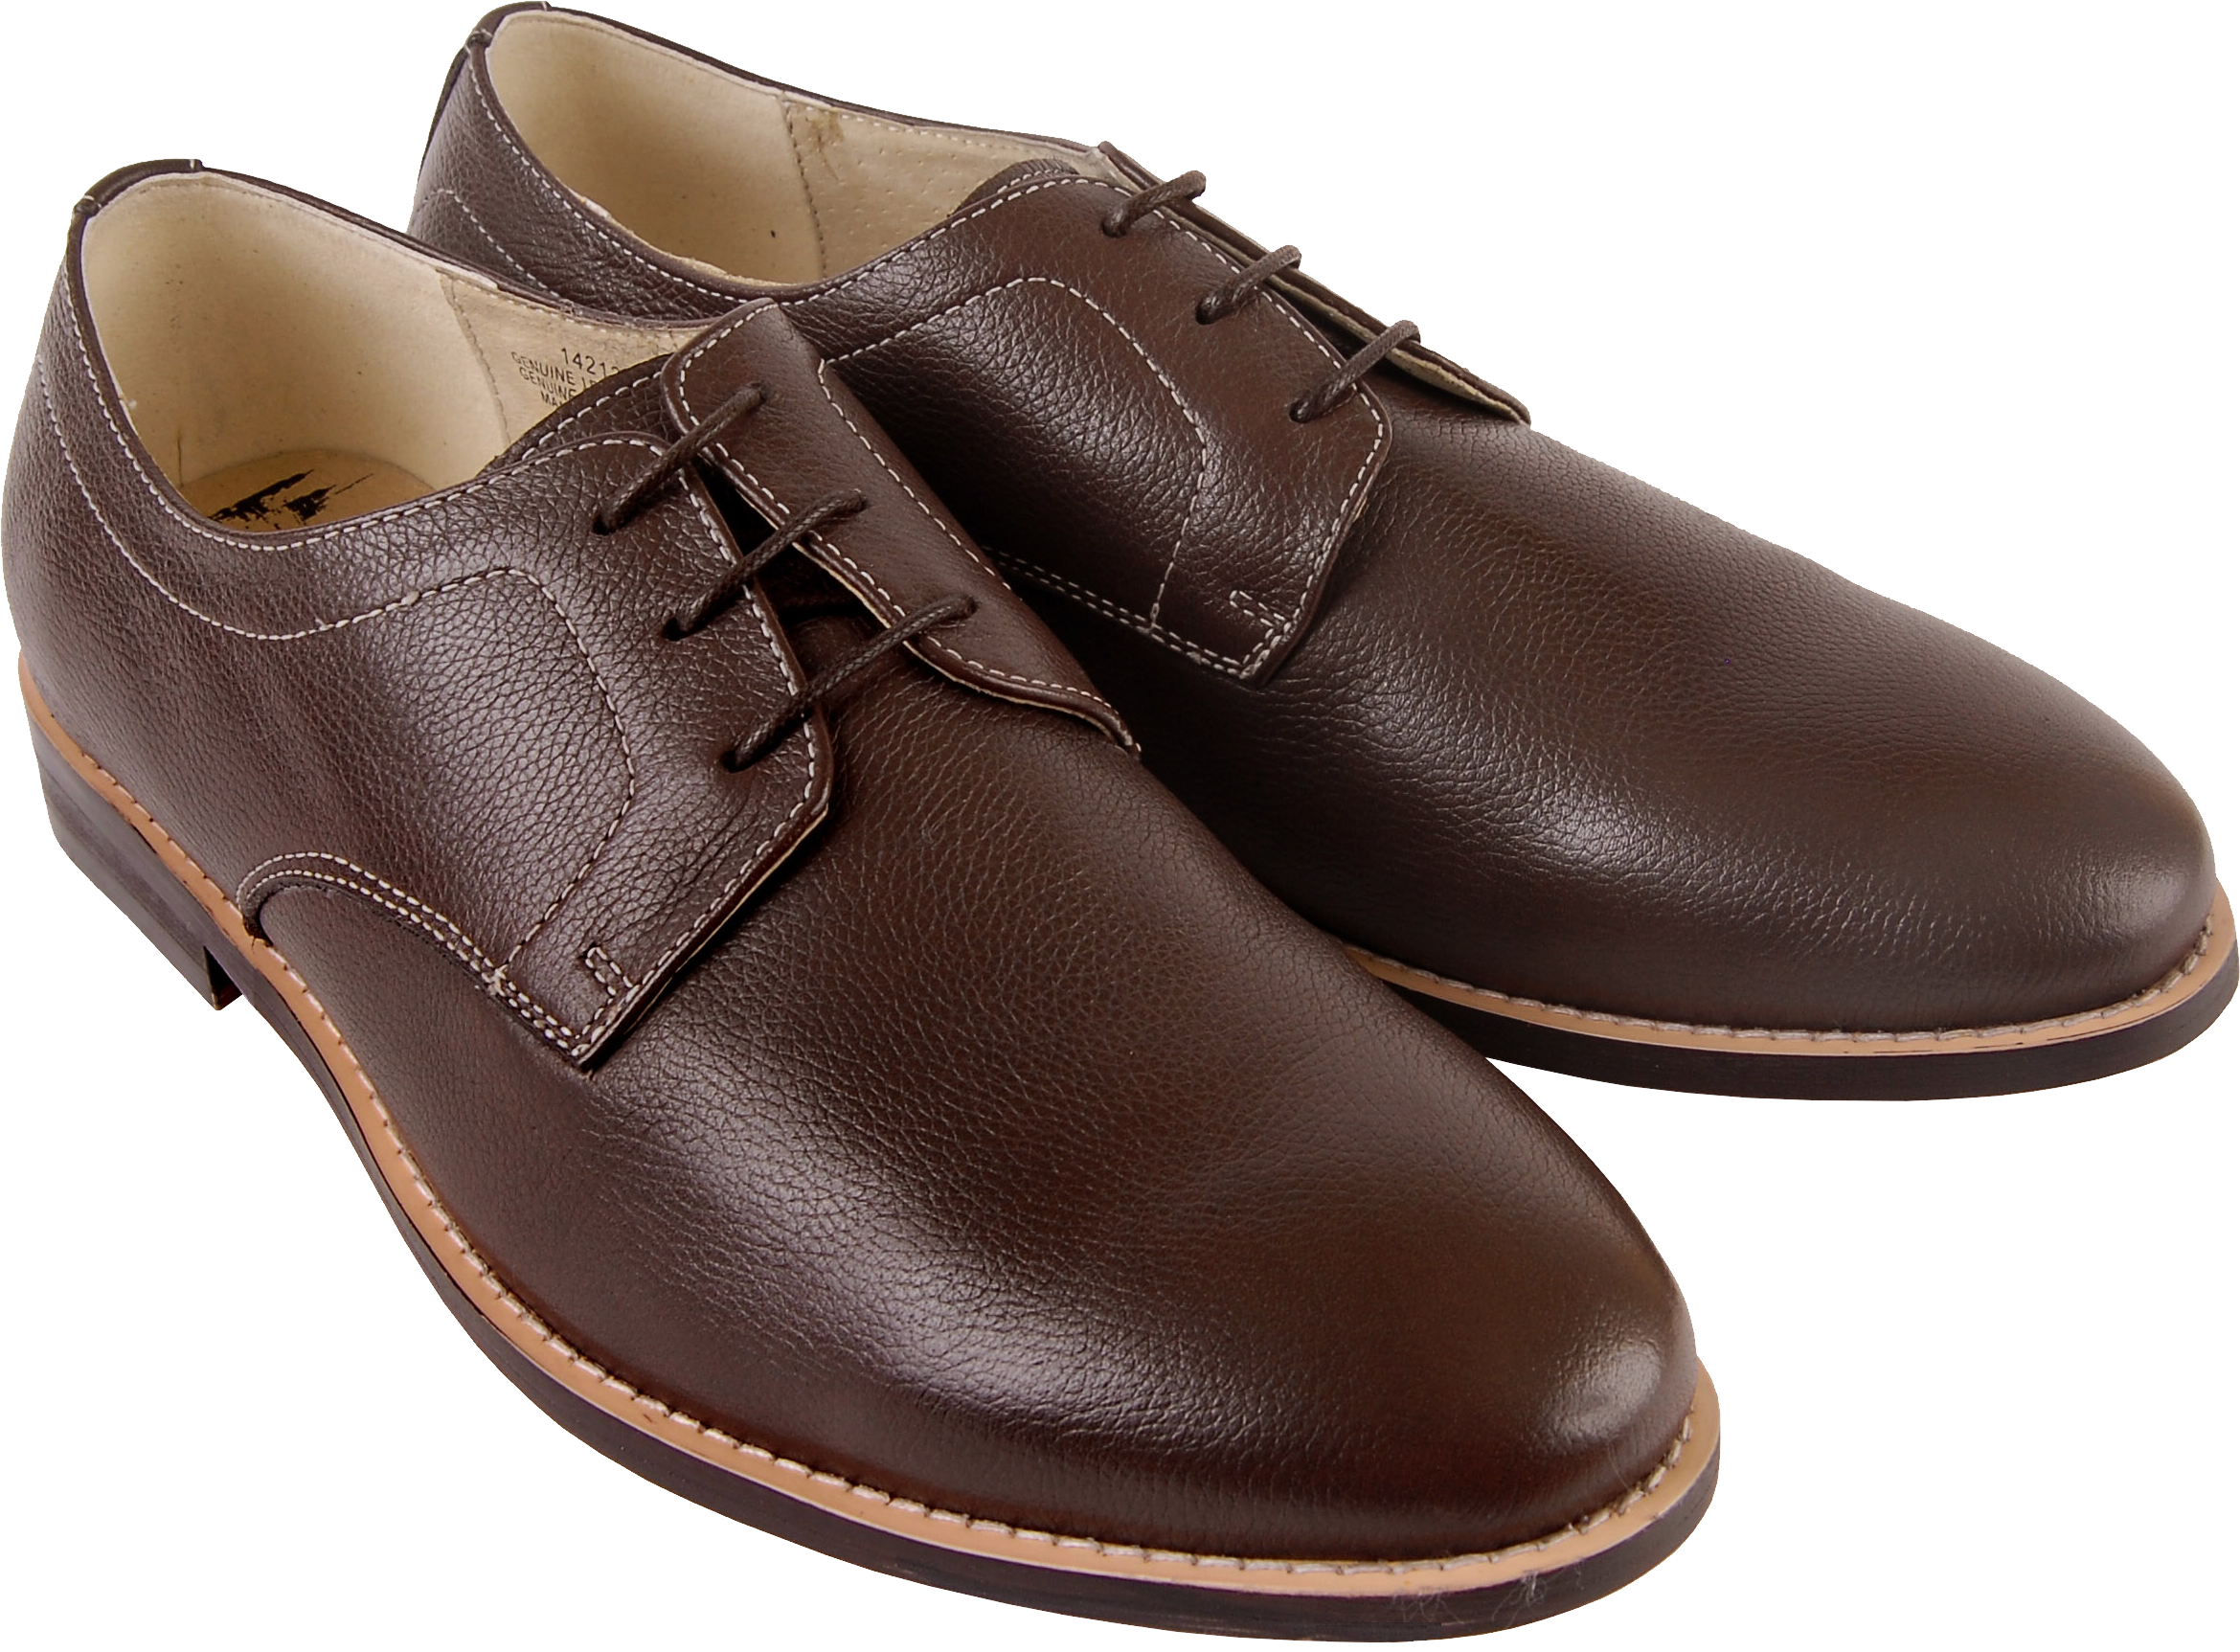 Brown men shoes PNG image